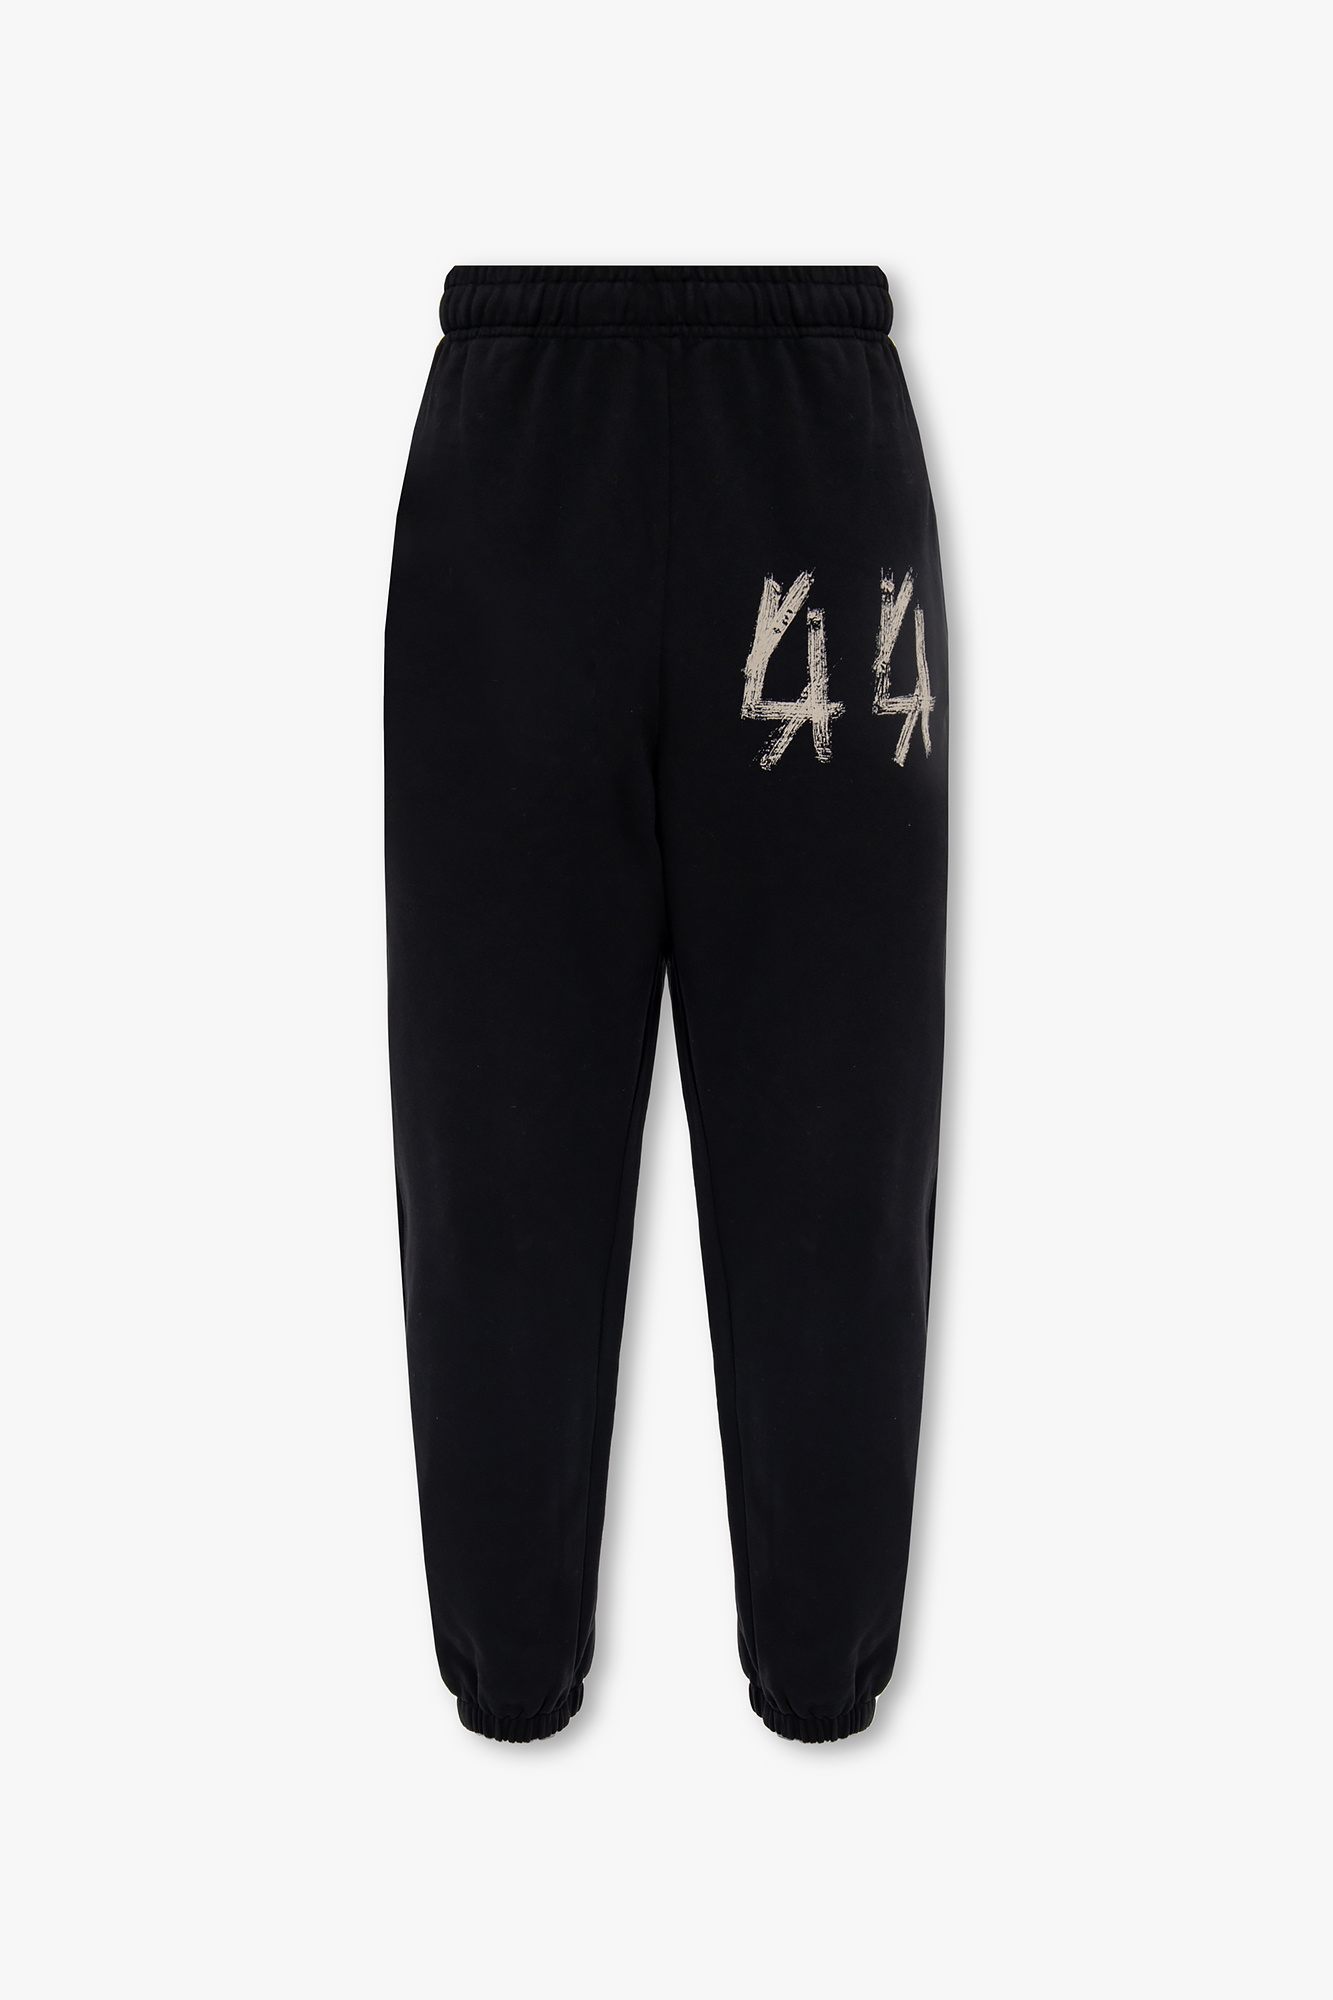 Nike Flare Sweatpants Gray Size M - $25 - From Alexa